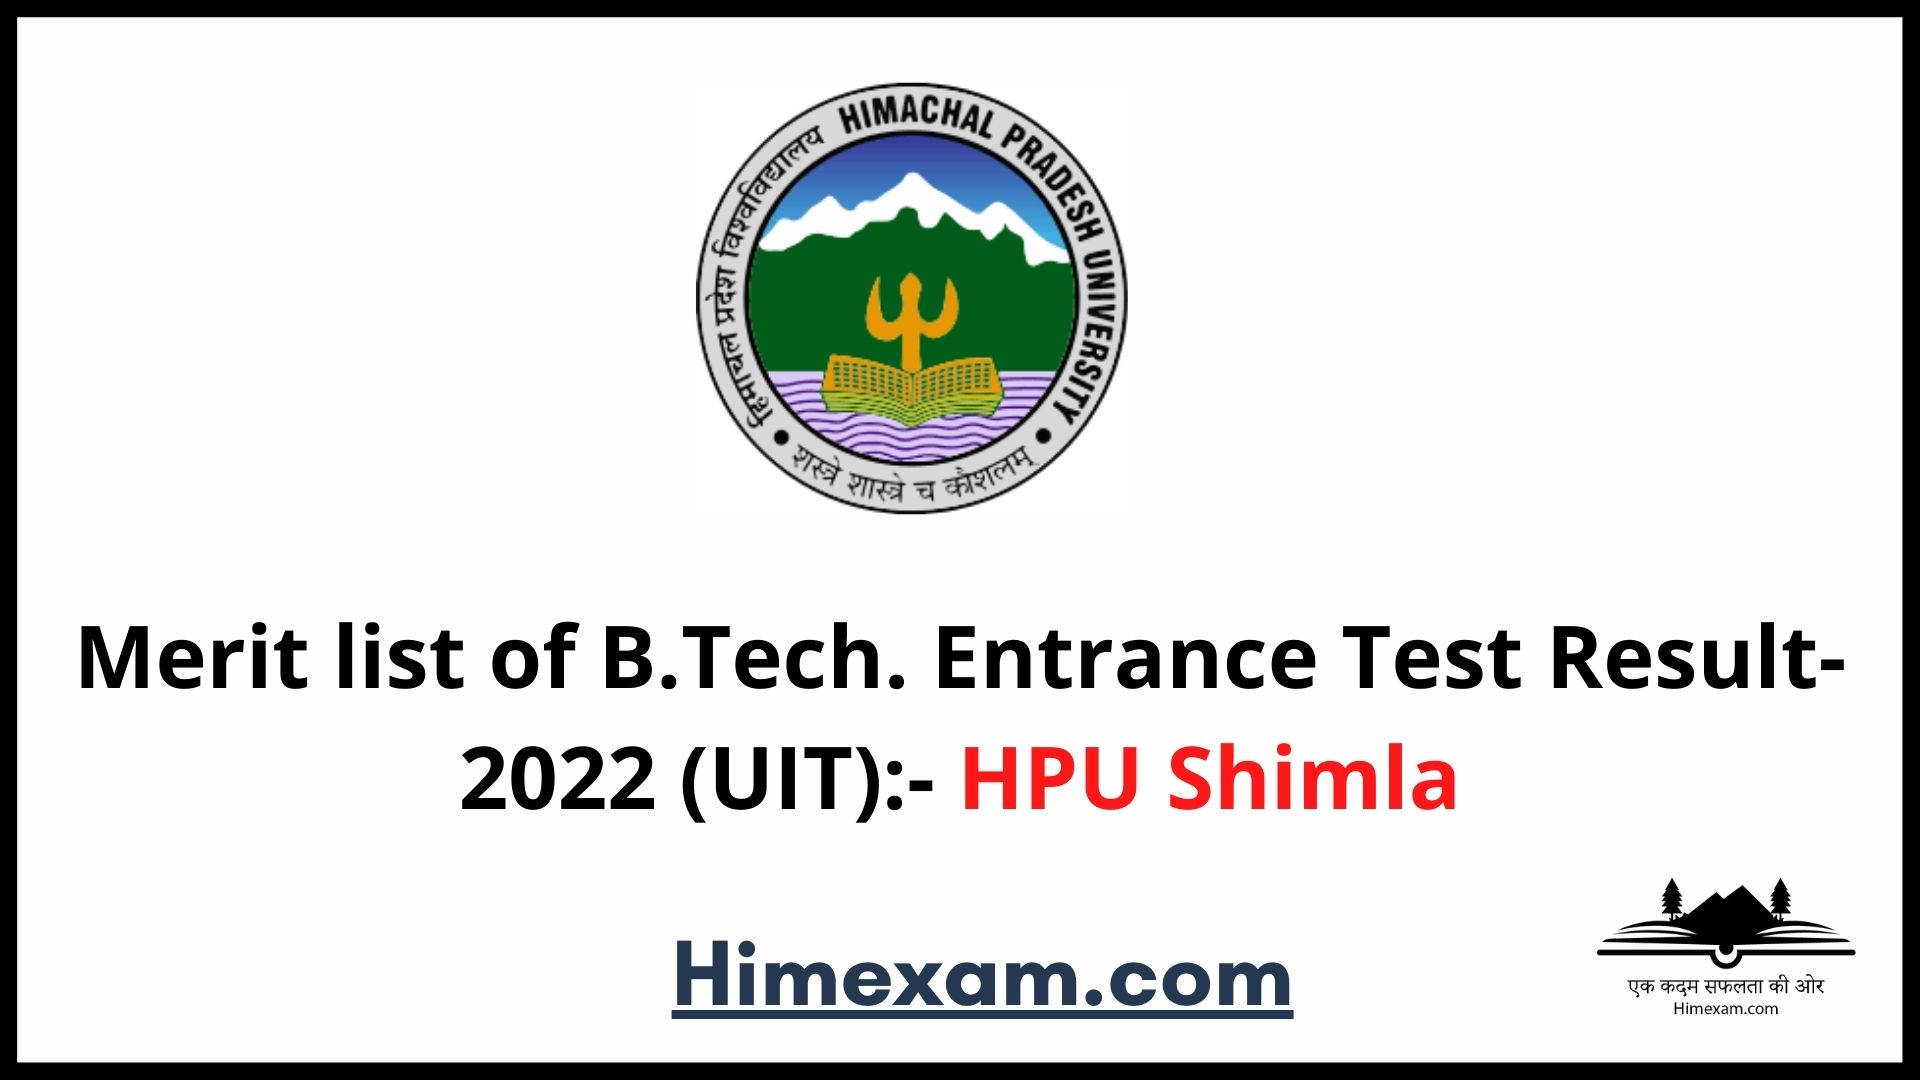 Merit list of B.Tech. Entrance Test Result-2022 (UIT):- HPU Shimla